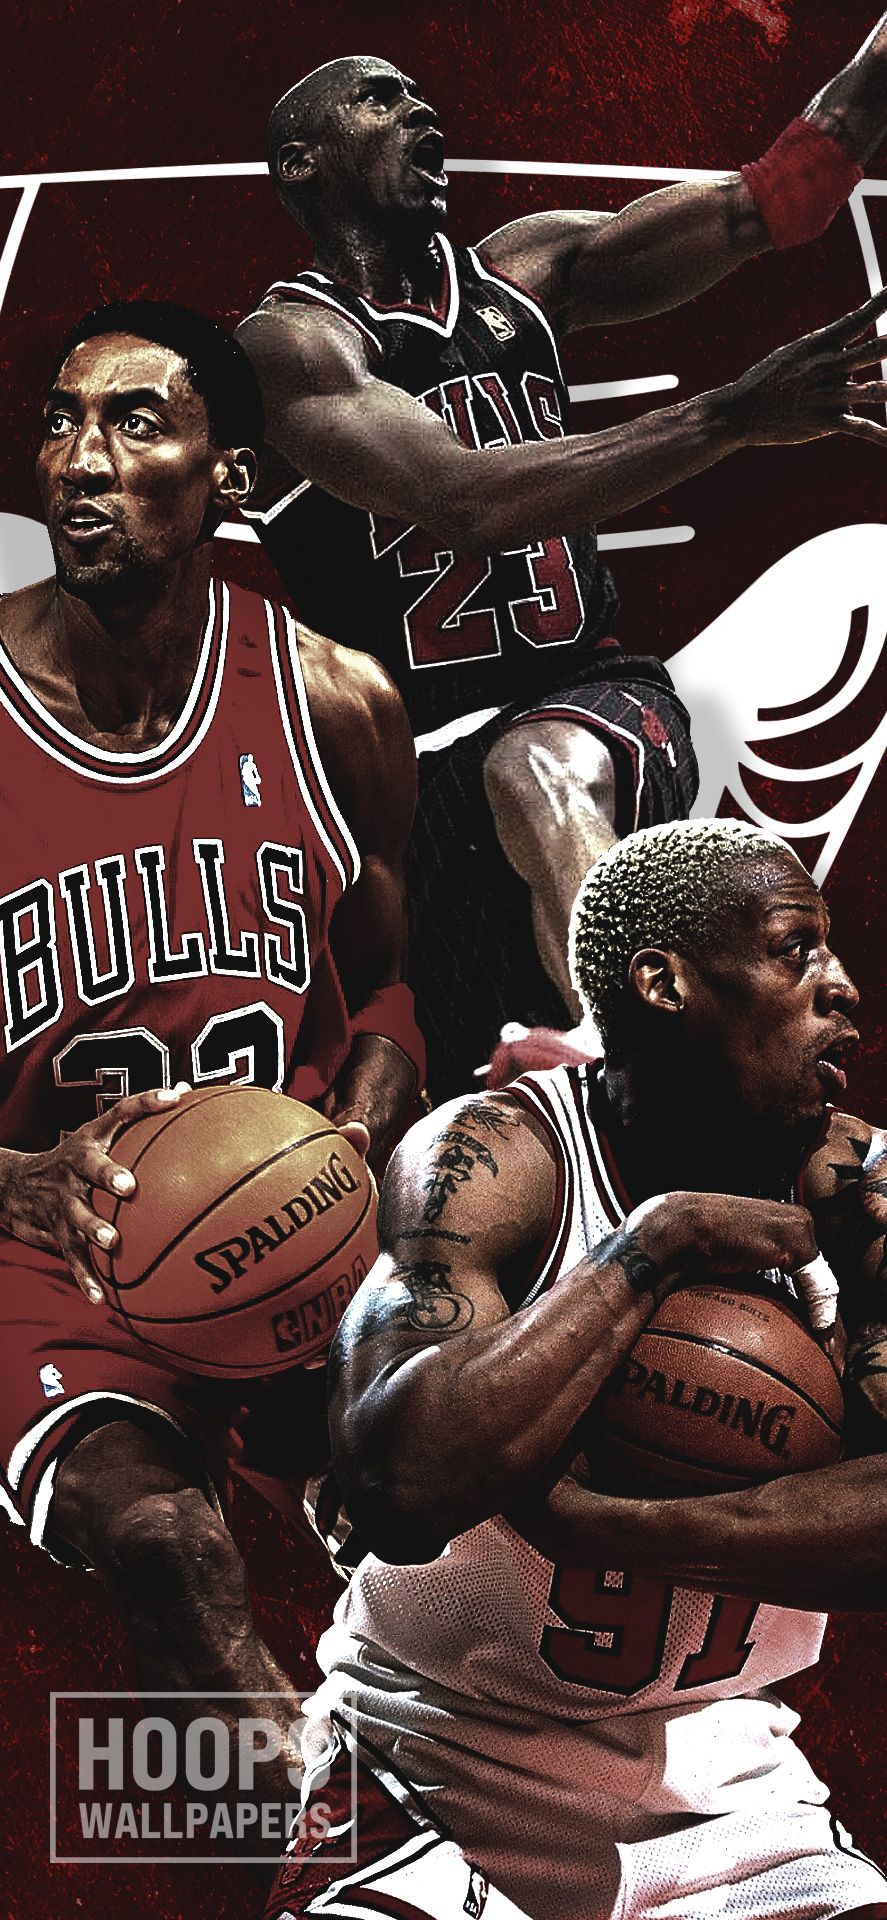 Wallpaper Basketball, Michael Jordan, NBA, Michael Jordan, NBA, Basketball,  Dennis Rodman, Scottie Pippen images for desktop, section спорт - download